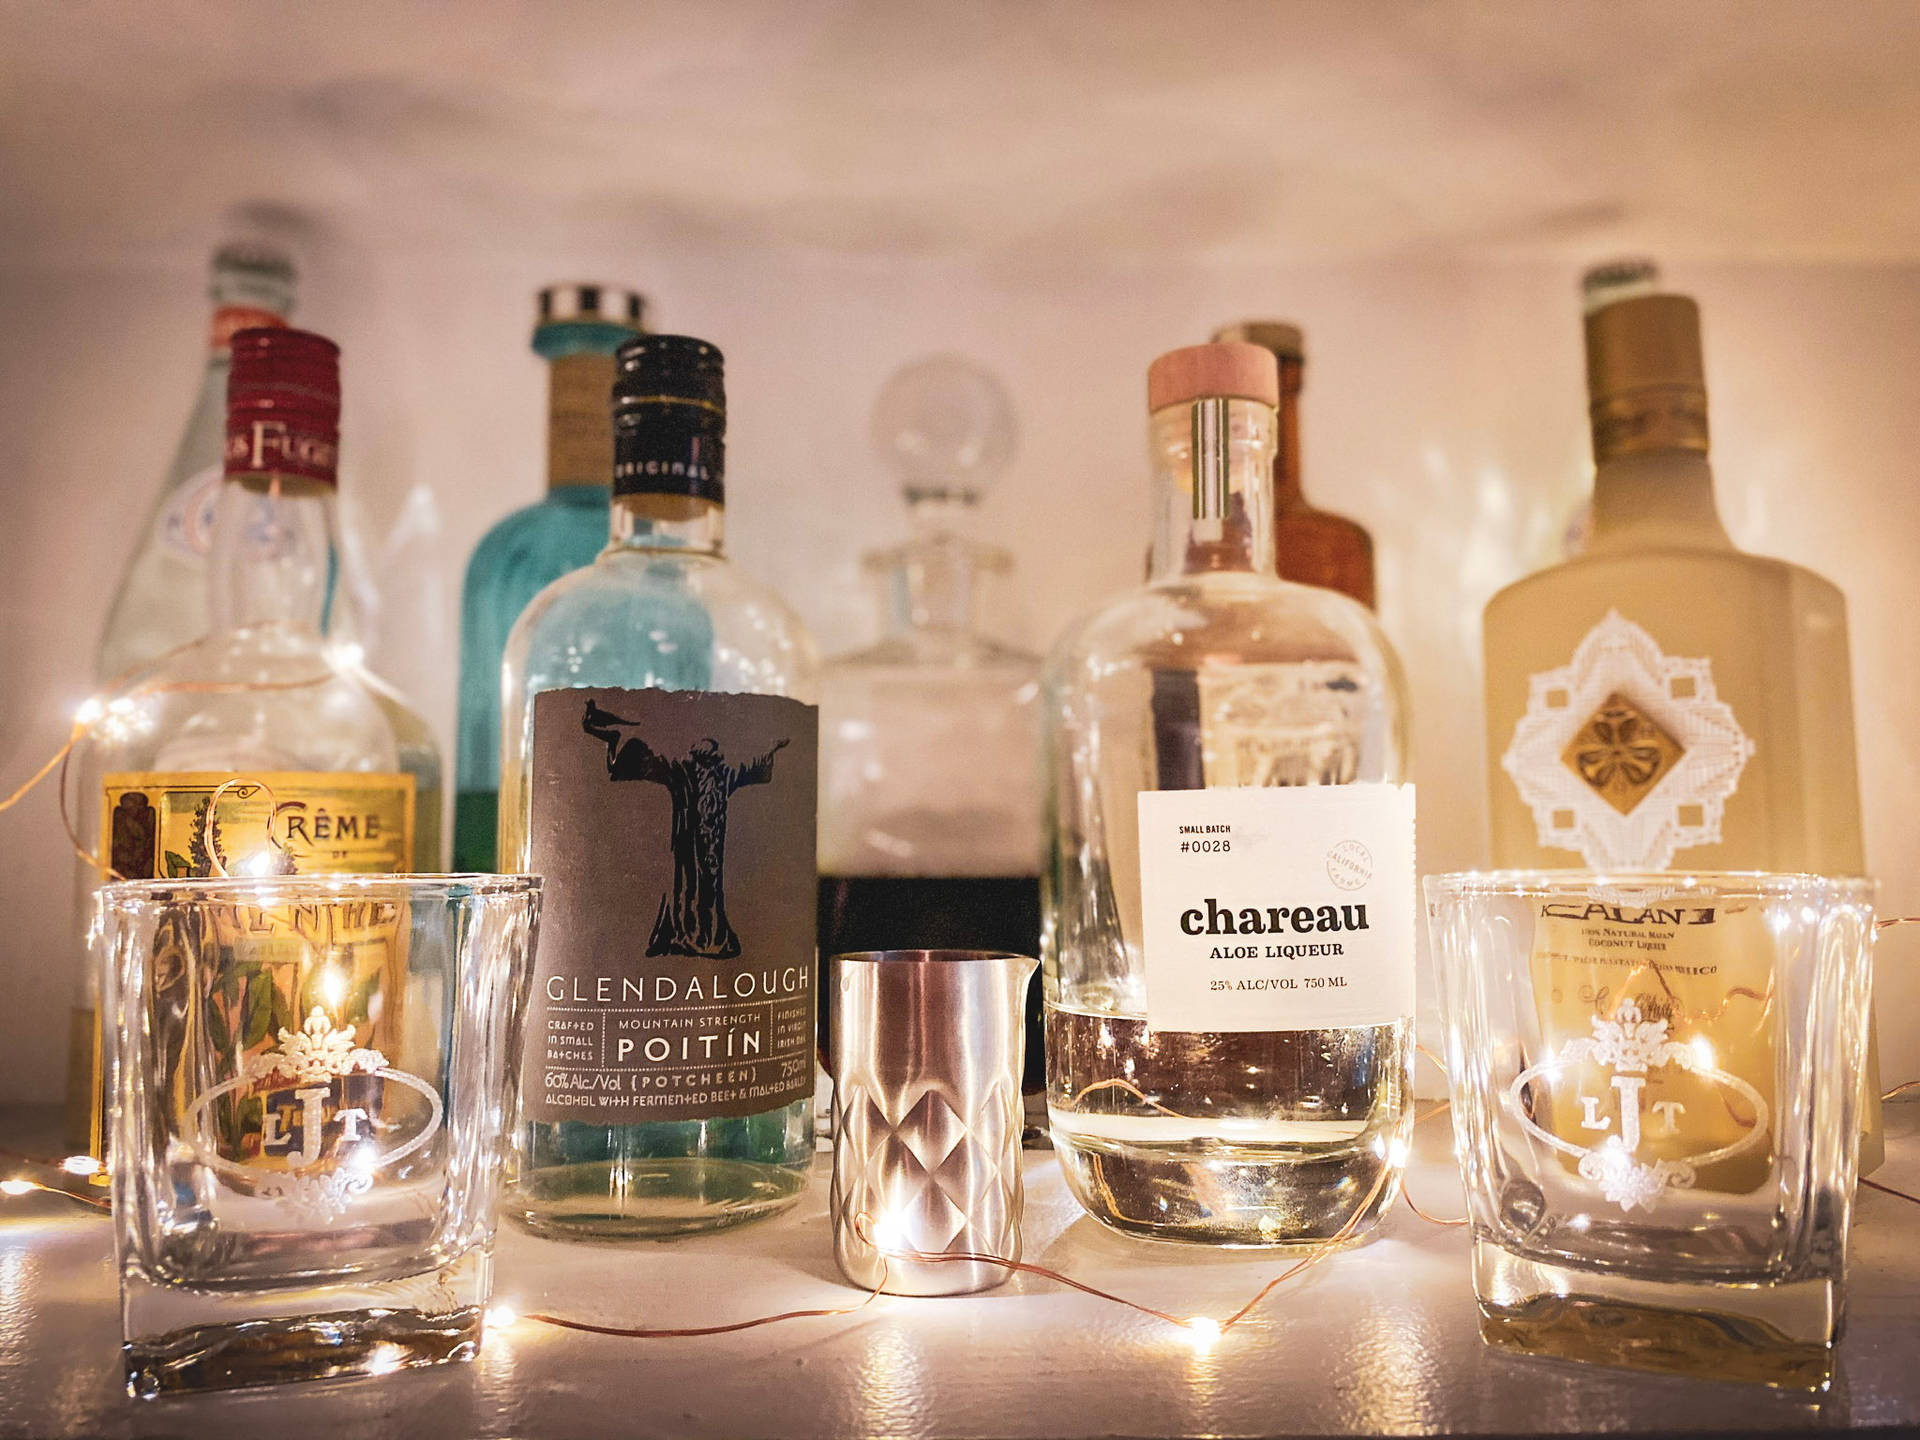 Glendalough Wild Gin Luxury Liquor Bar Wallpaper